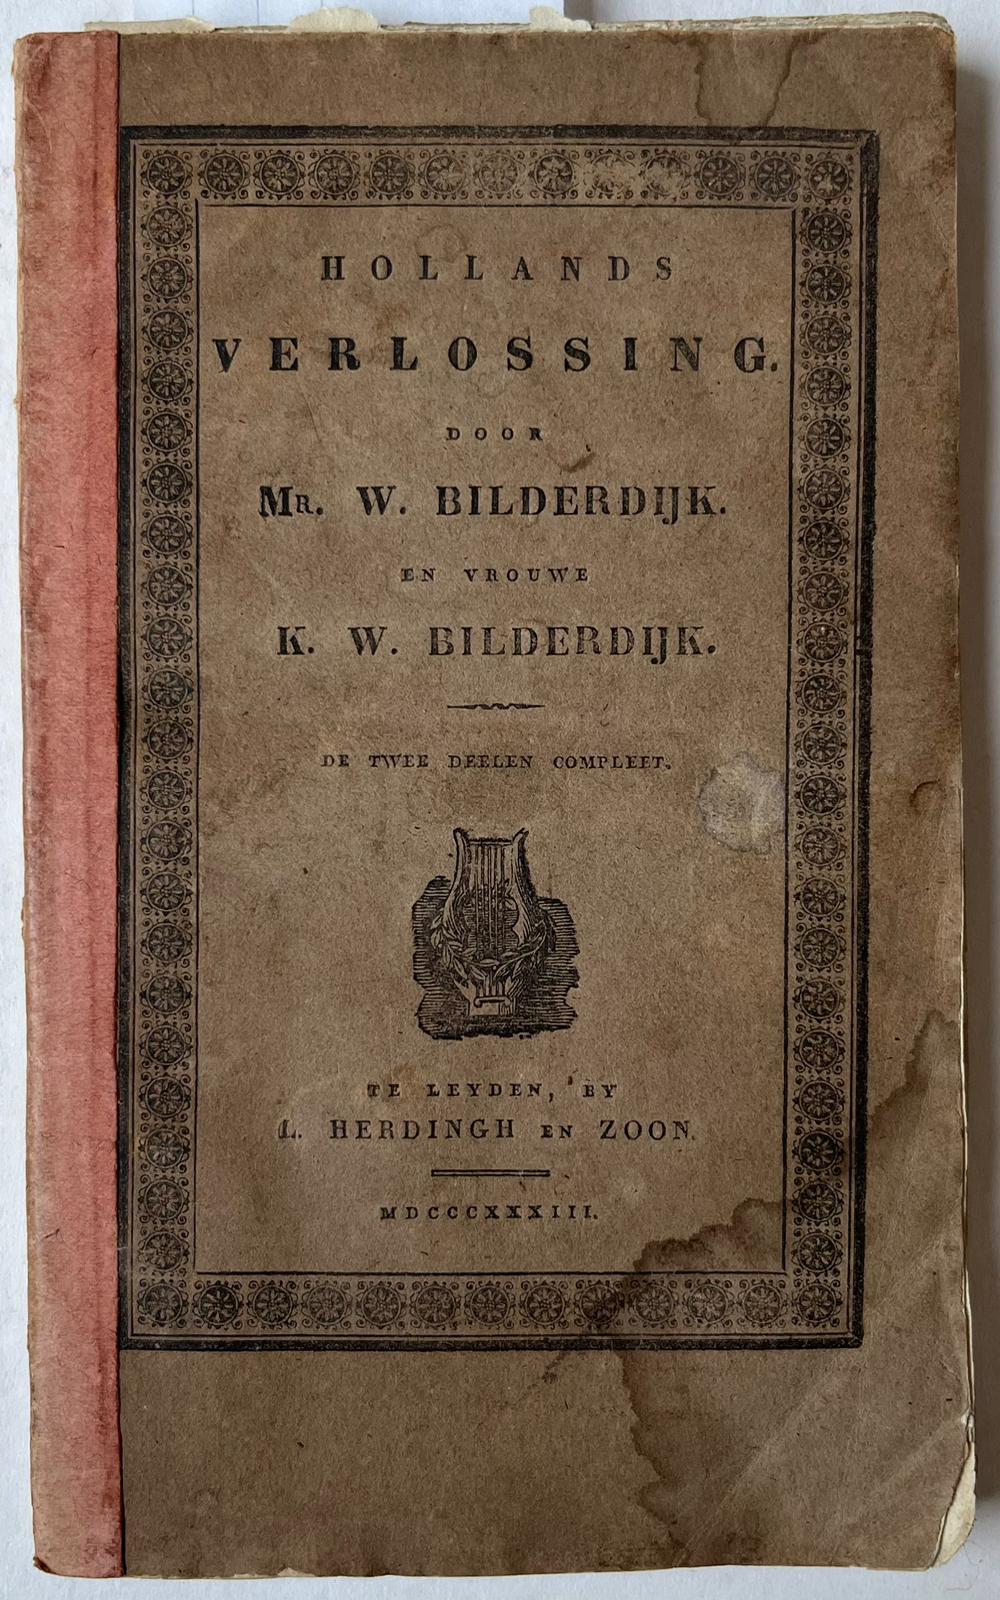 [Literature 1833] Hollands verlossing. Leiden, L. Herdingh en zoon, 1833, [2 parts in 1 volume]